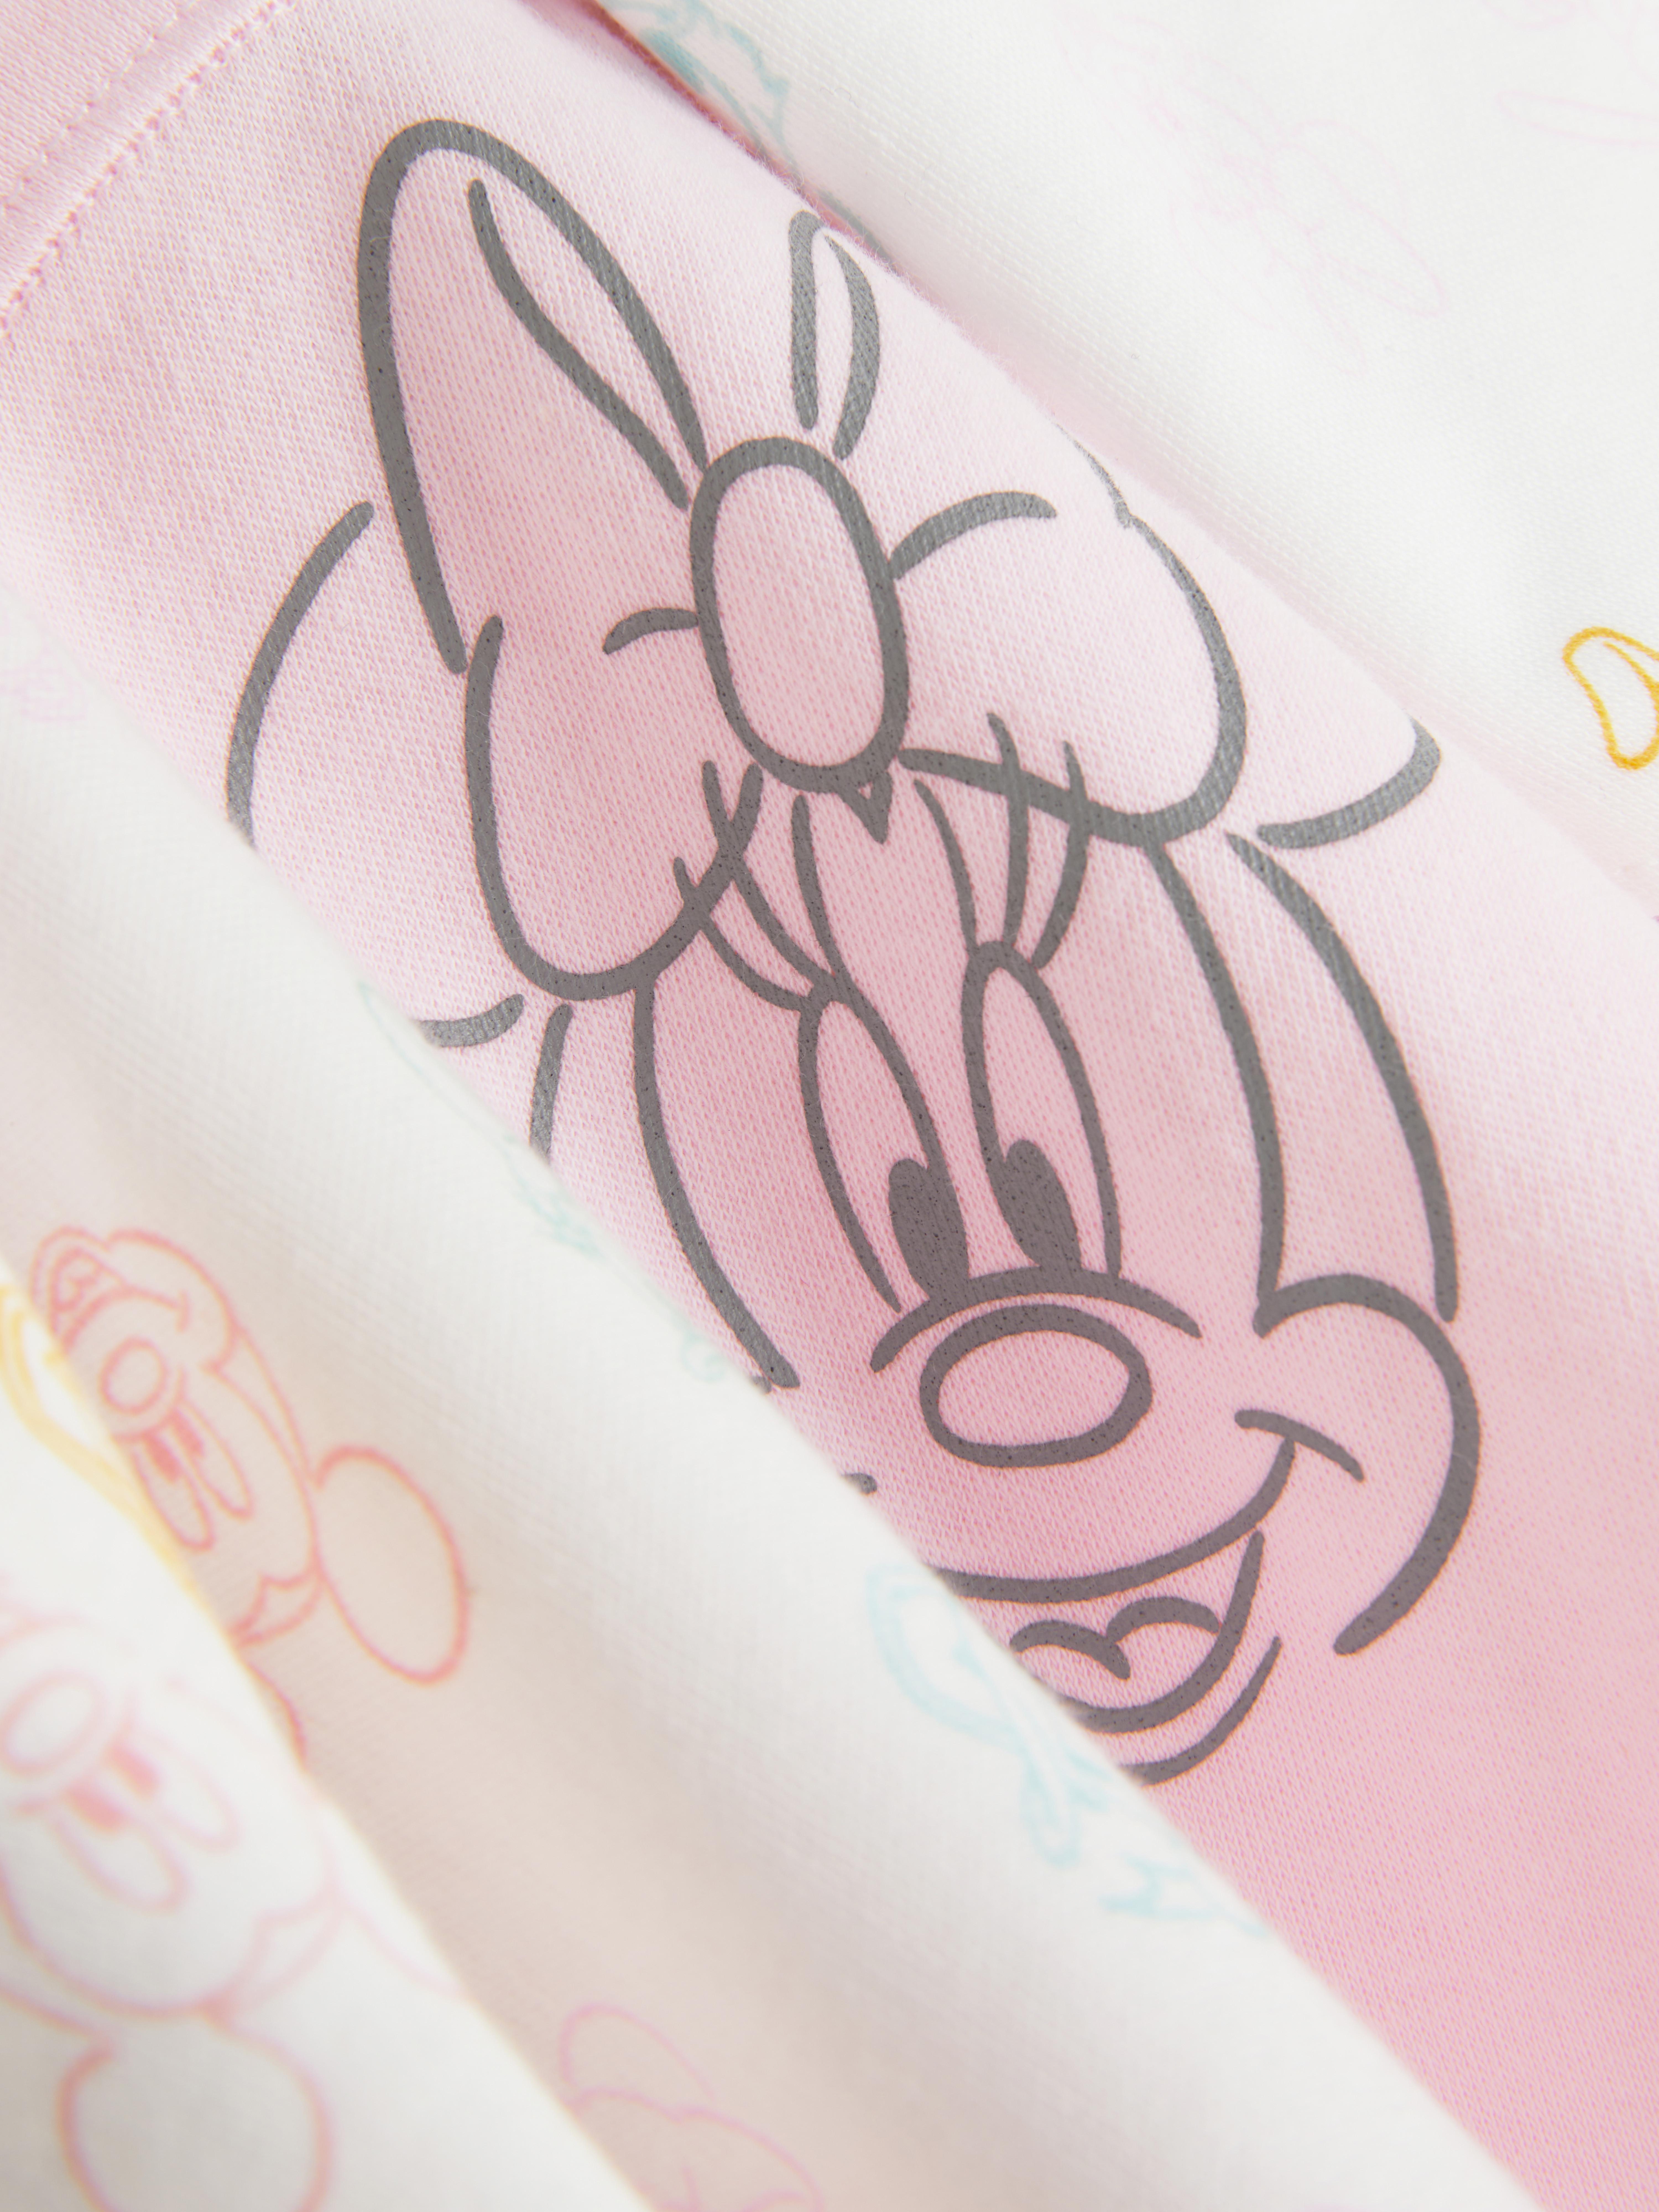 Primark, Bottoms, Primark Disney Minnie Mouse Sweatpants Size 2436 Month